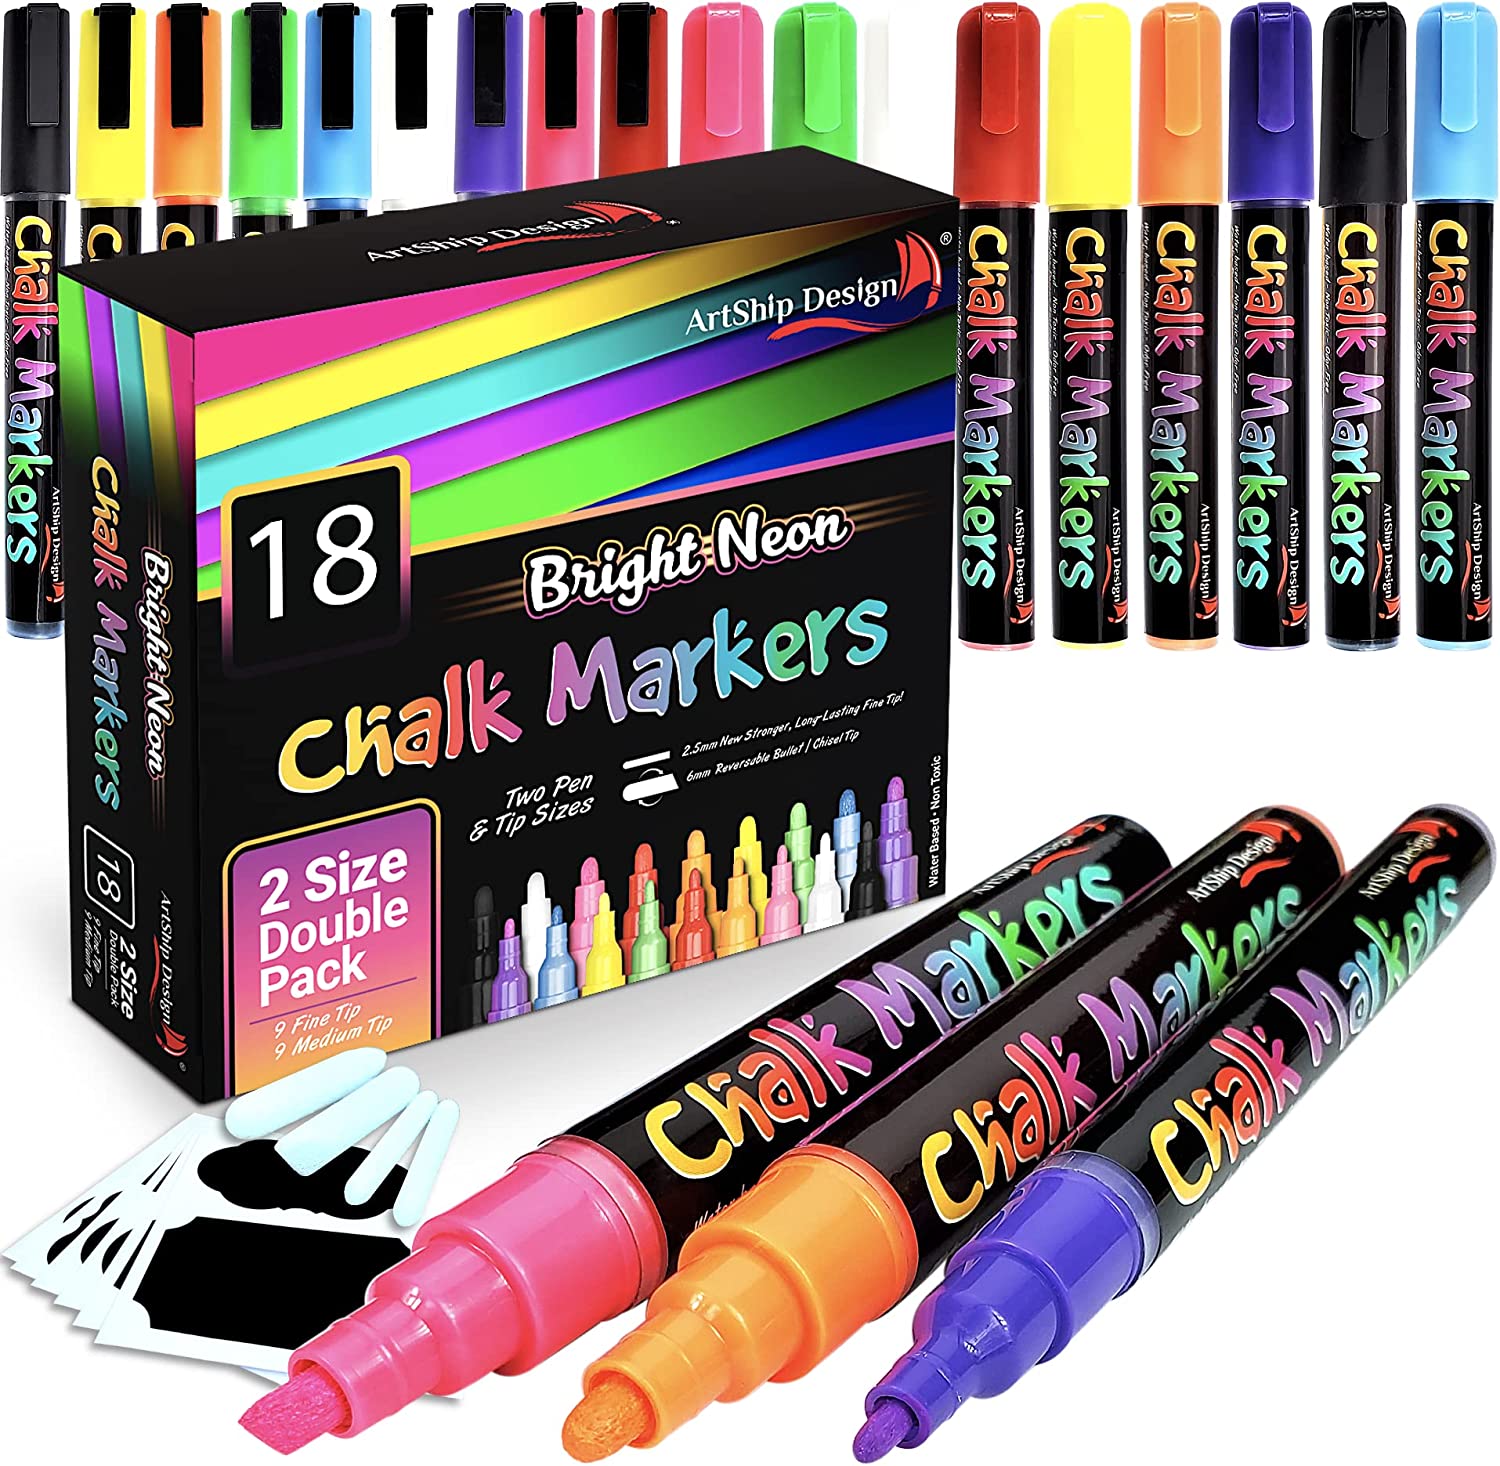 Chalkola Liquid Chalk Markers Erasable (10 Pack) w/Gold & Silver - Washable  Paint Chalk Pens for